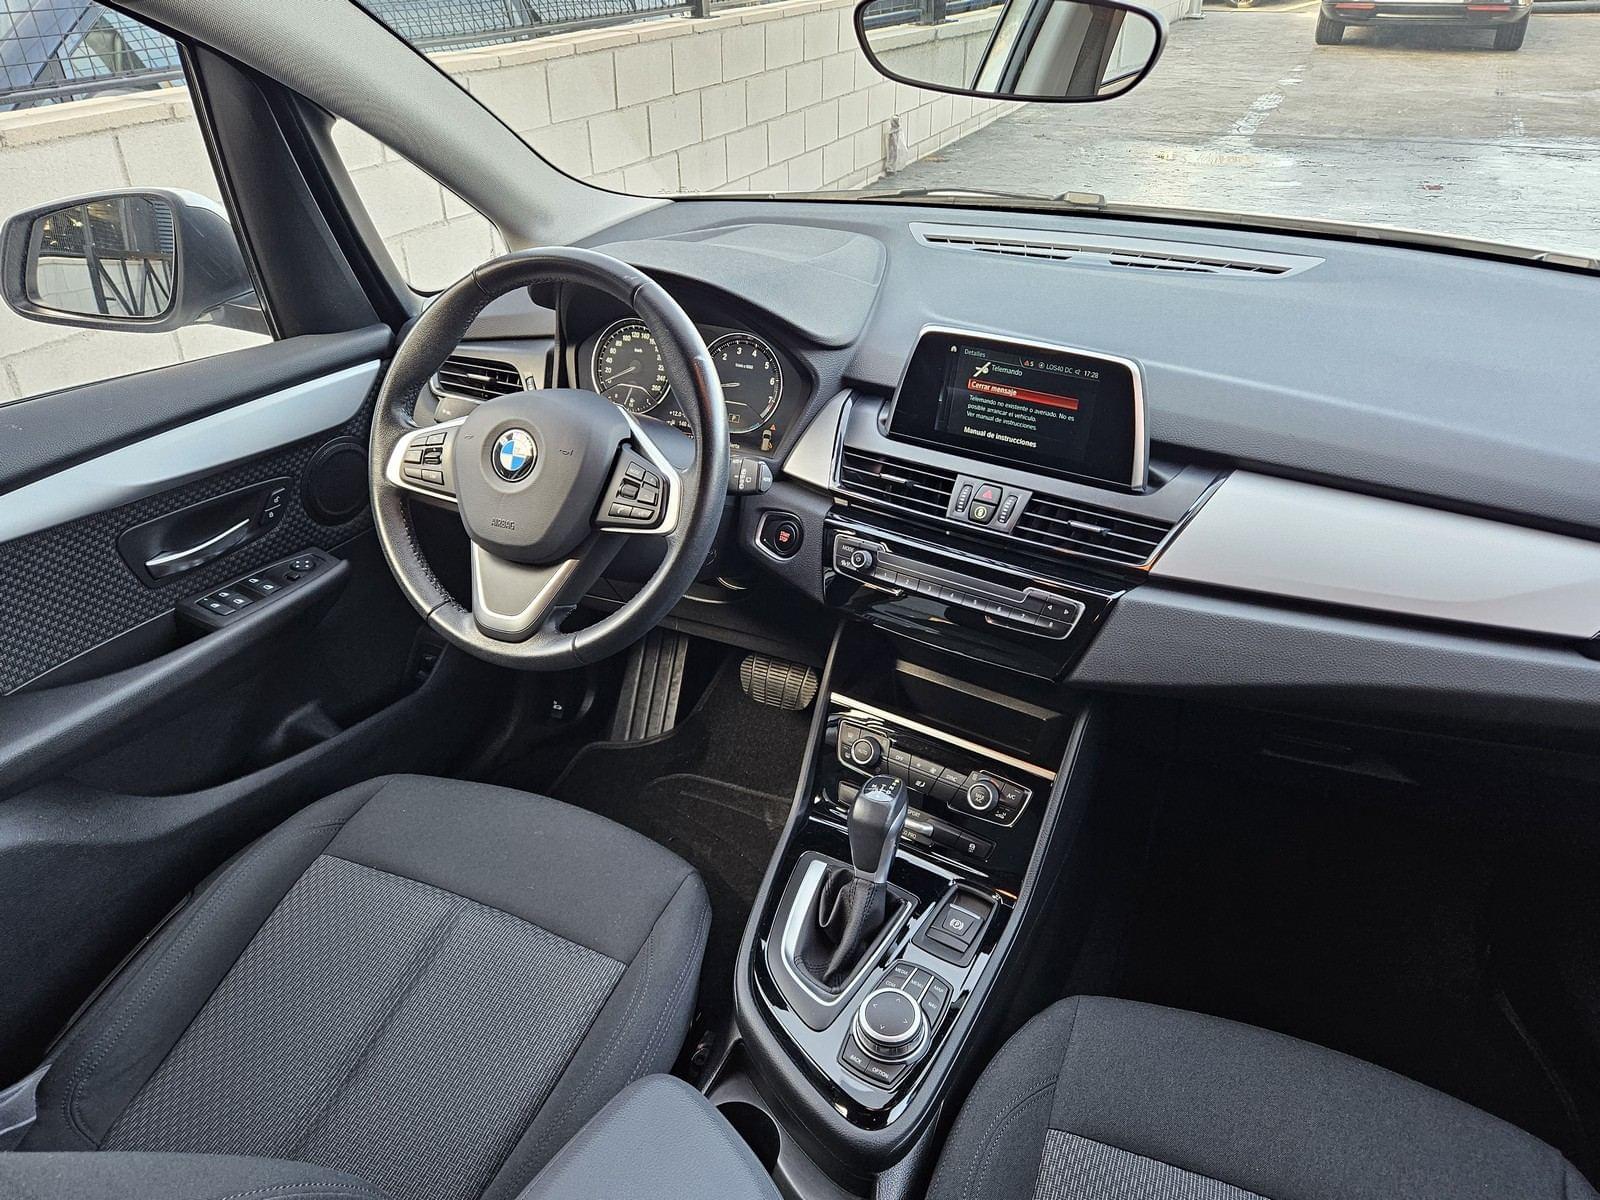 BMW SERIE 2 ACTIVE TOURER 225 XE IPERFORMANCE 1.5 135 CV AT6 E6DT 10 